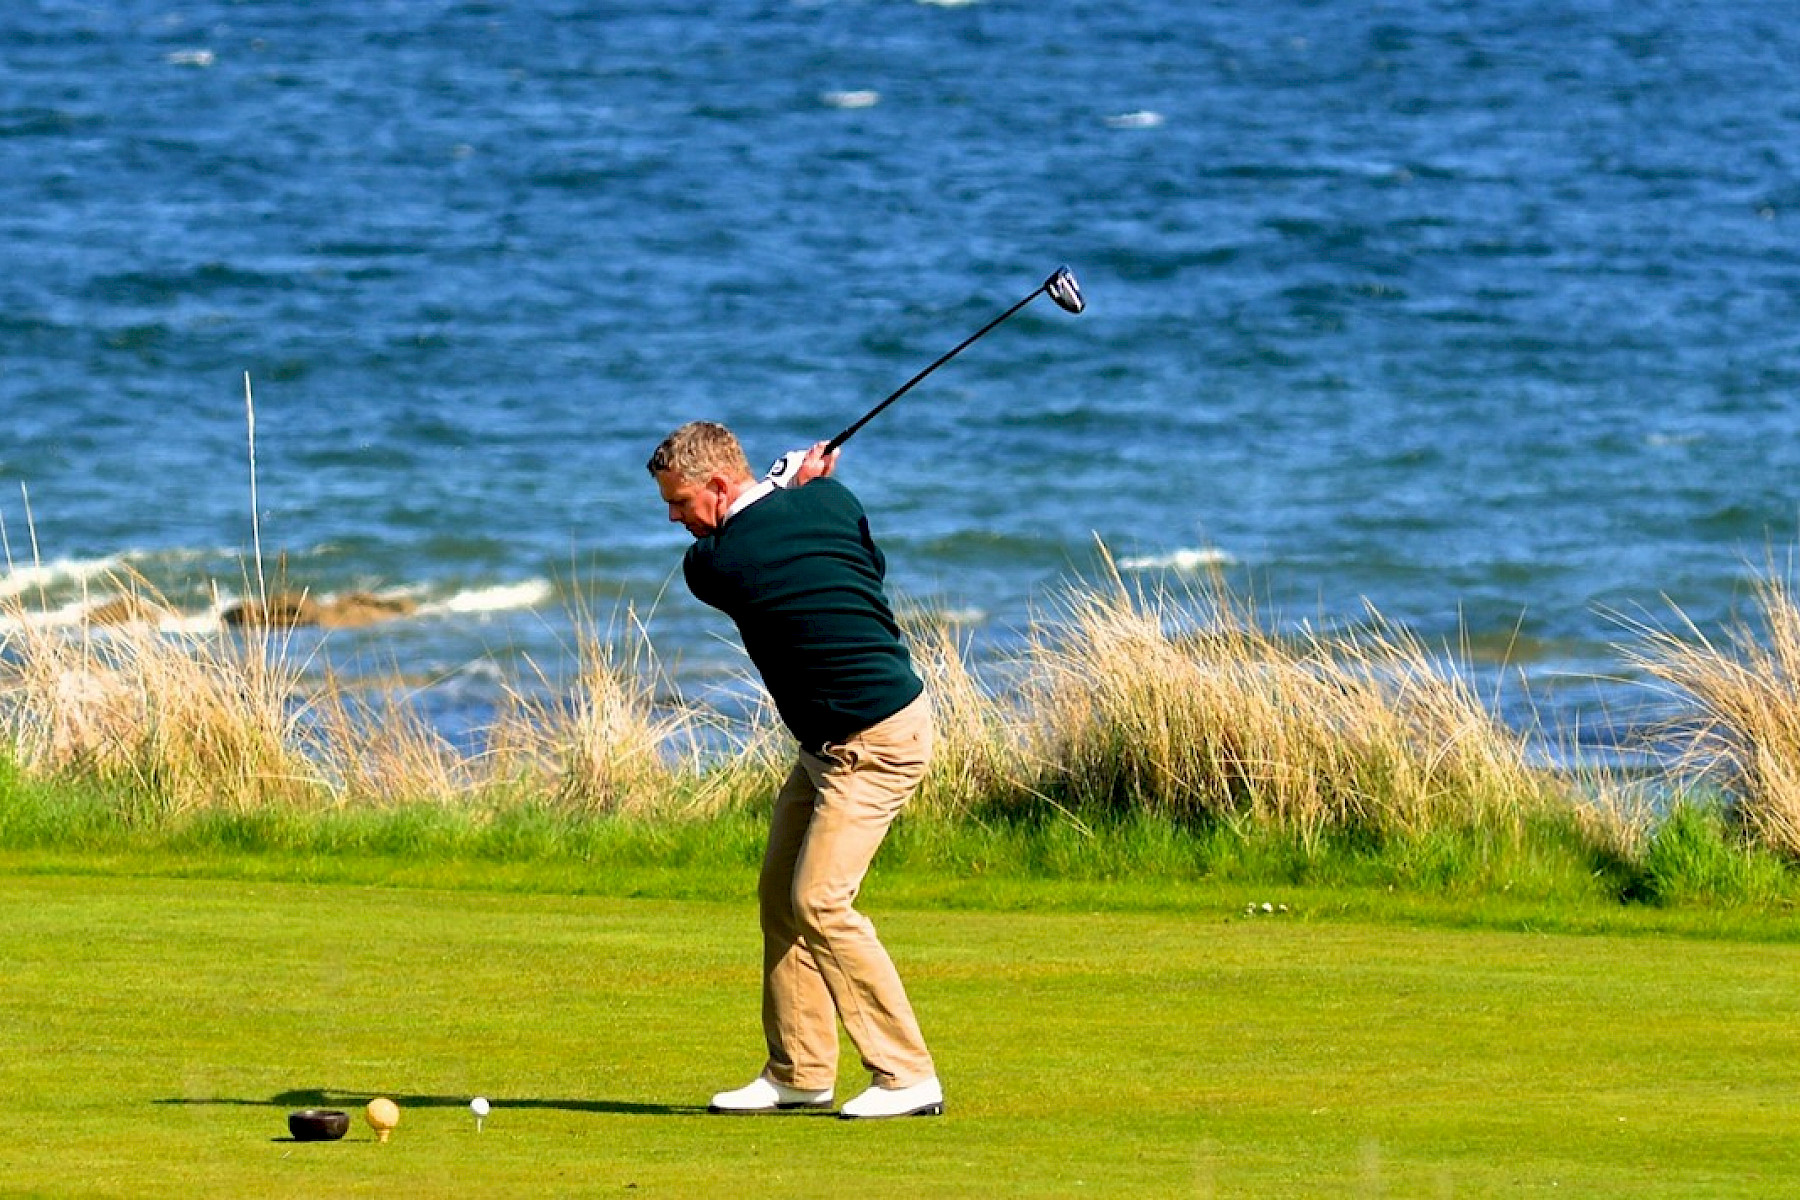 Dornoch image: Golfer takes a swing